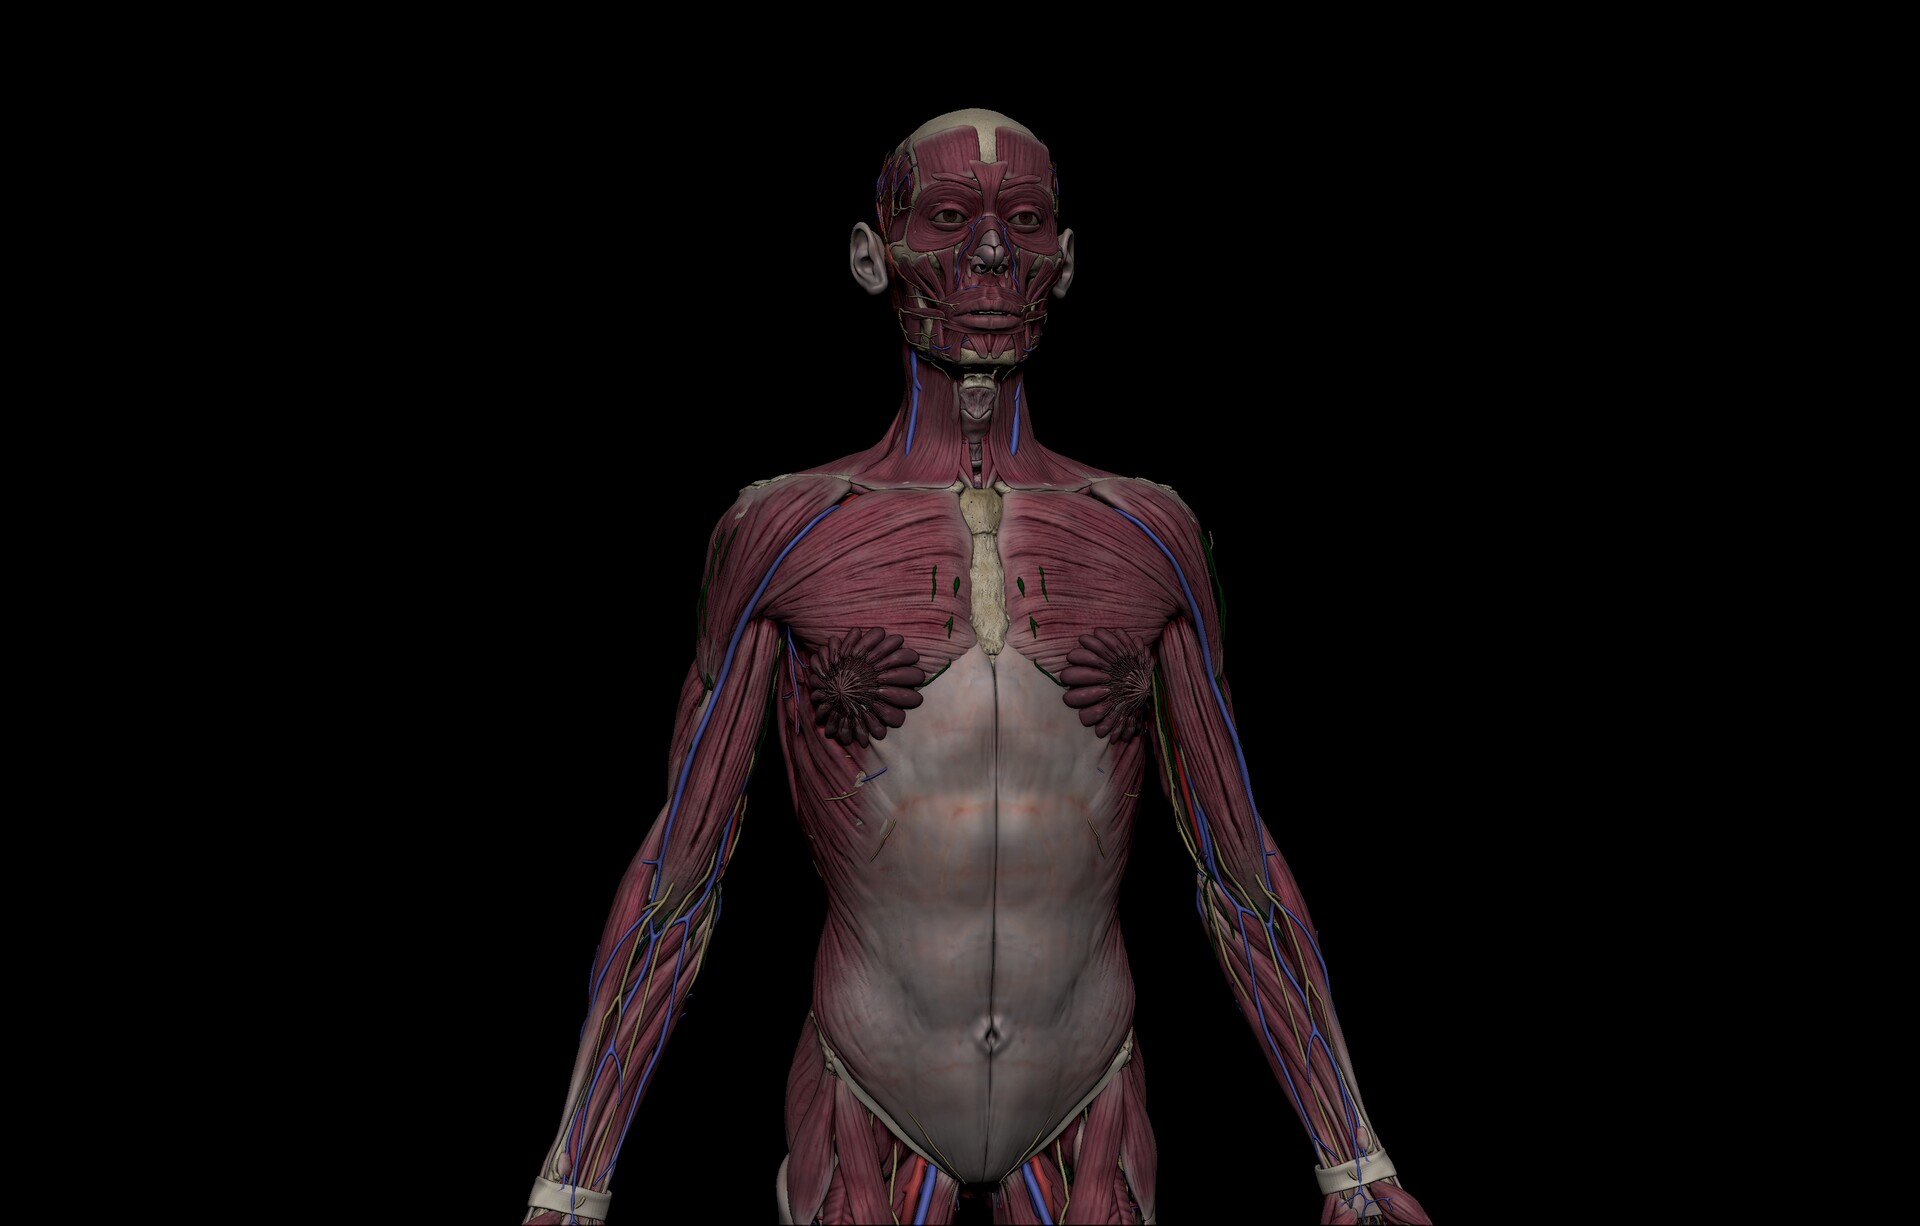 ArtStation - HD Human Anatomy 3D Models